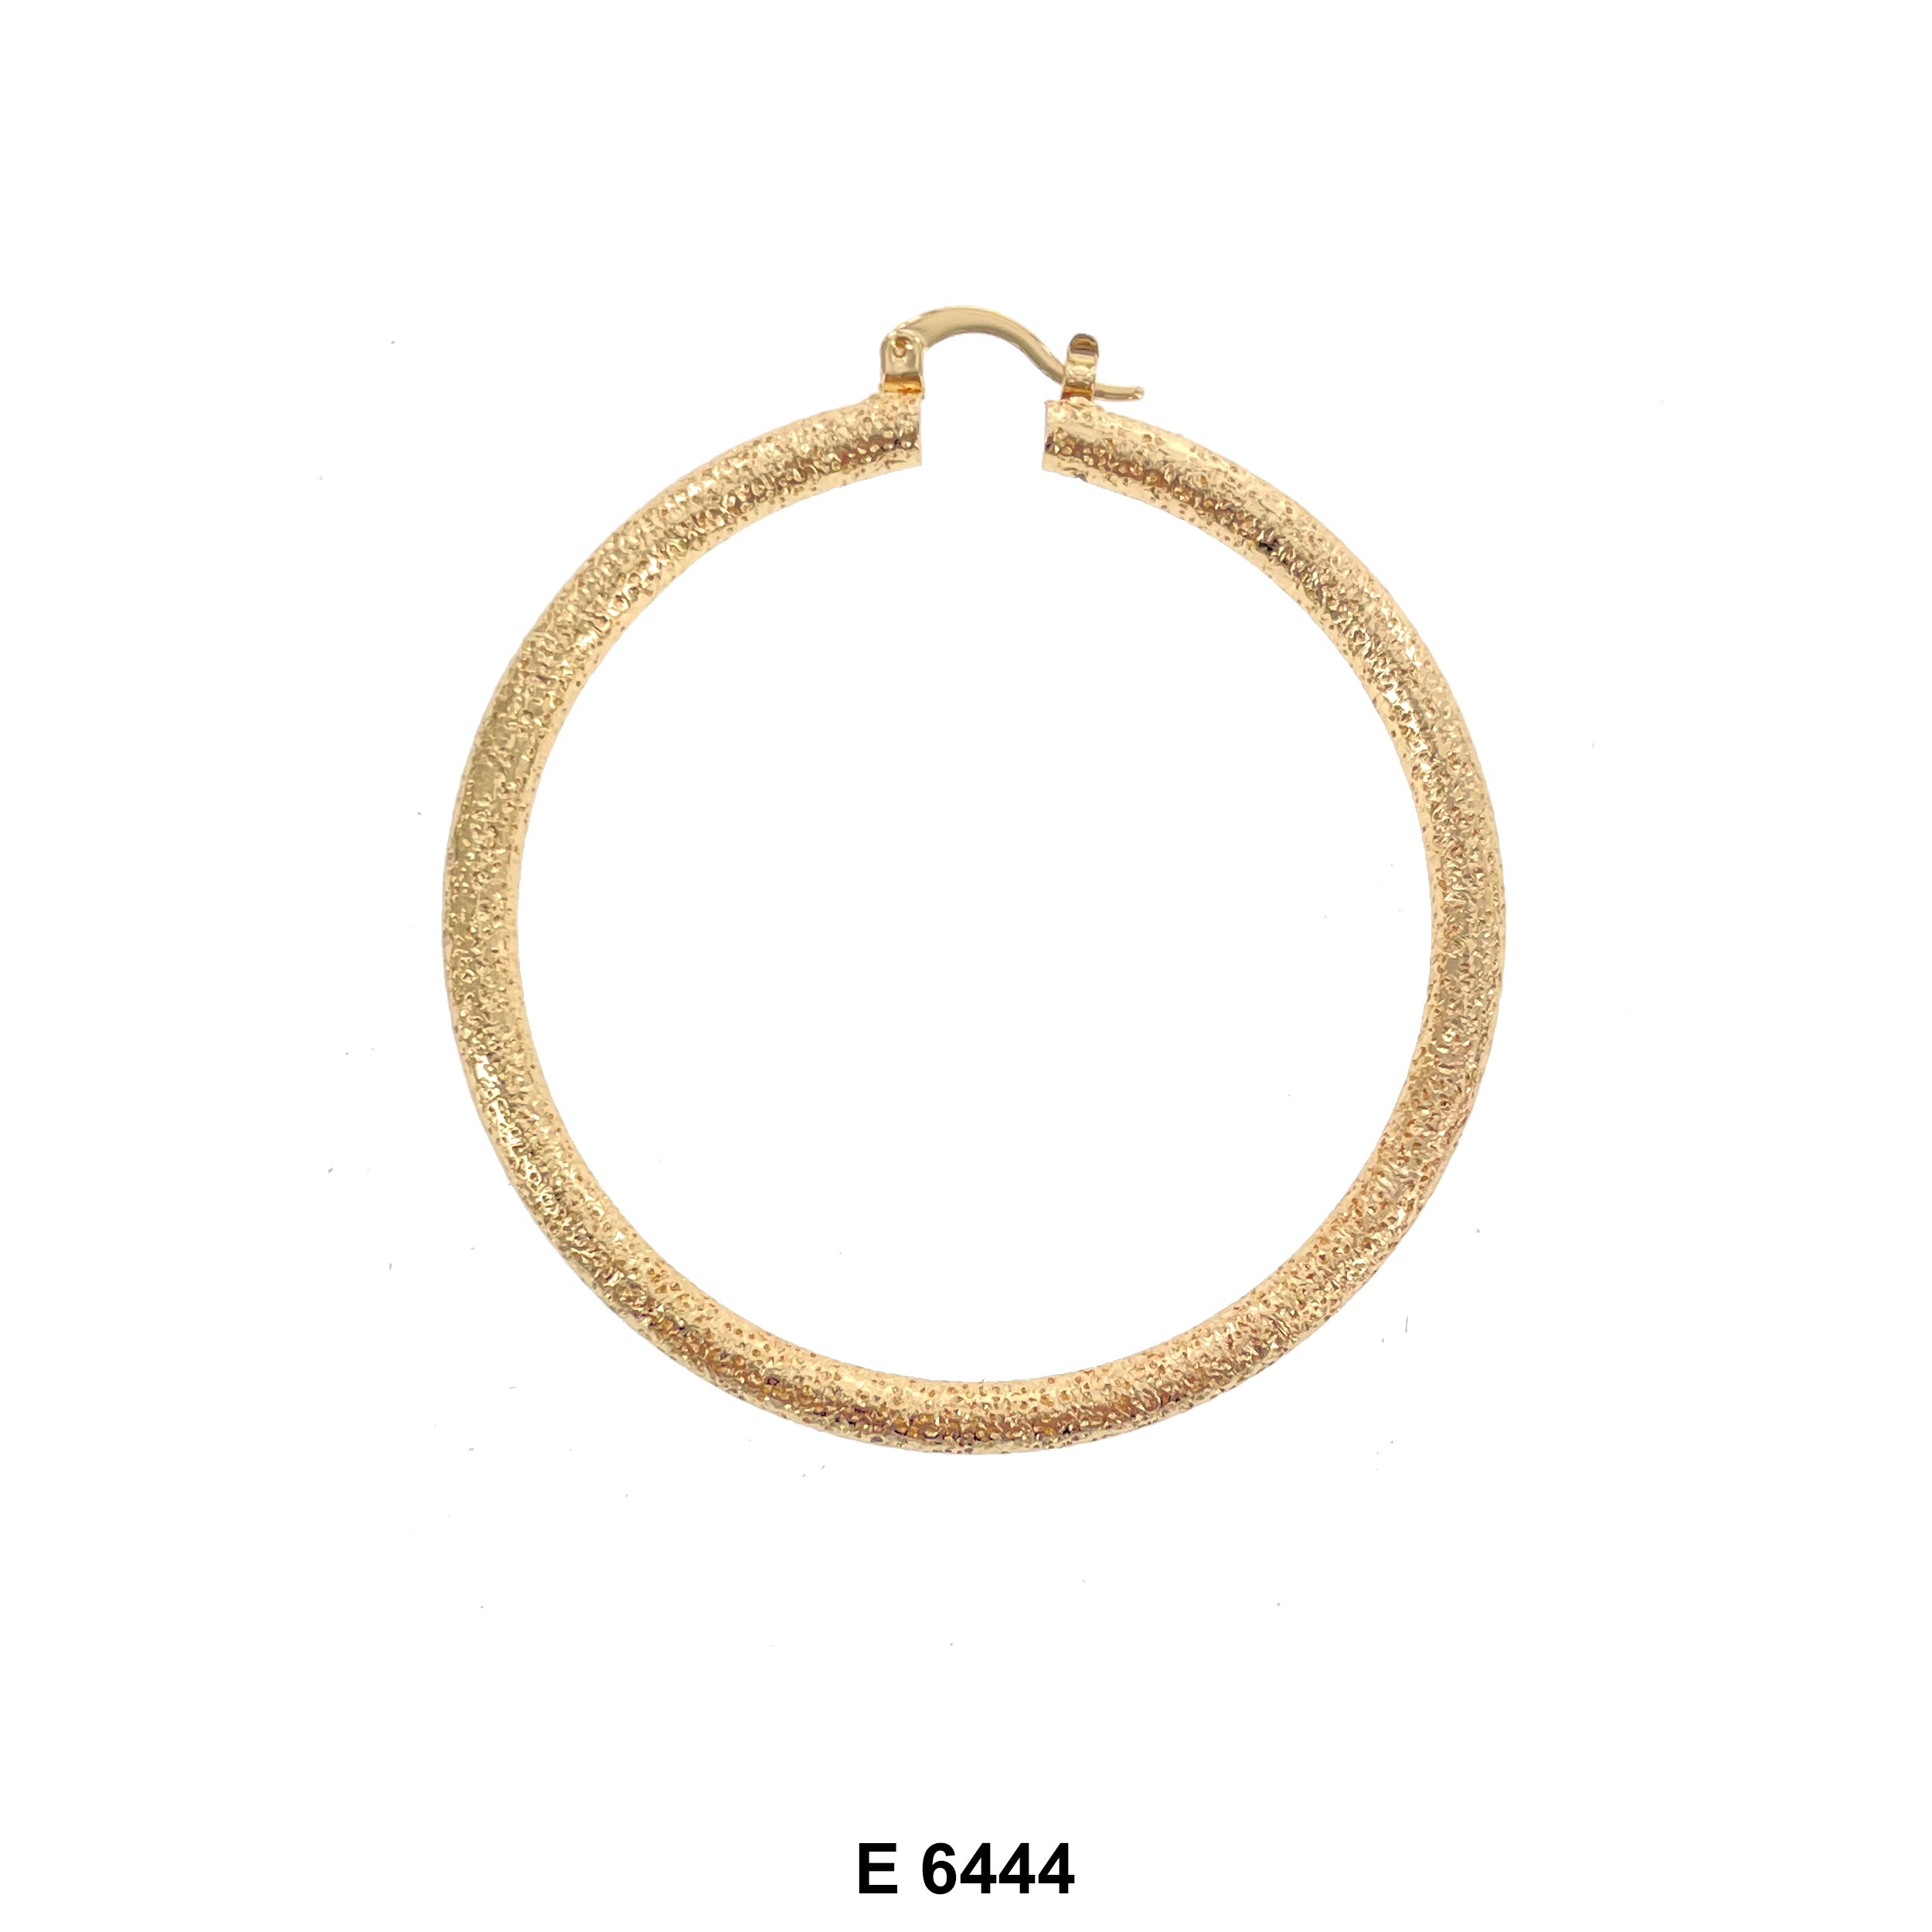 Engraved Hoop Earrings E 6444